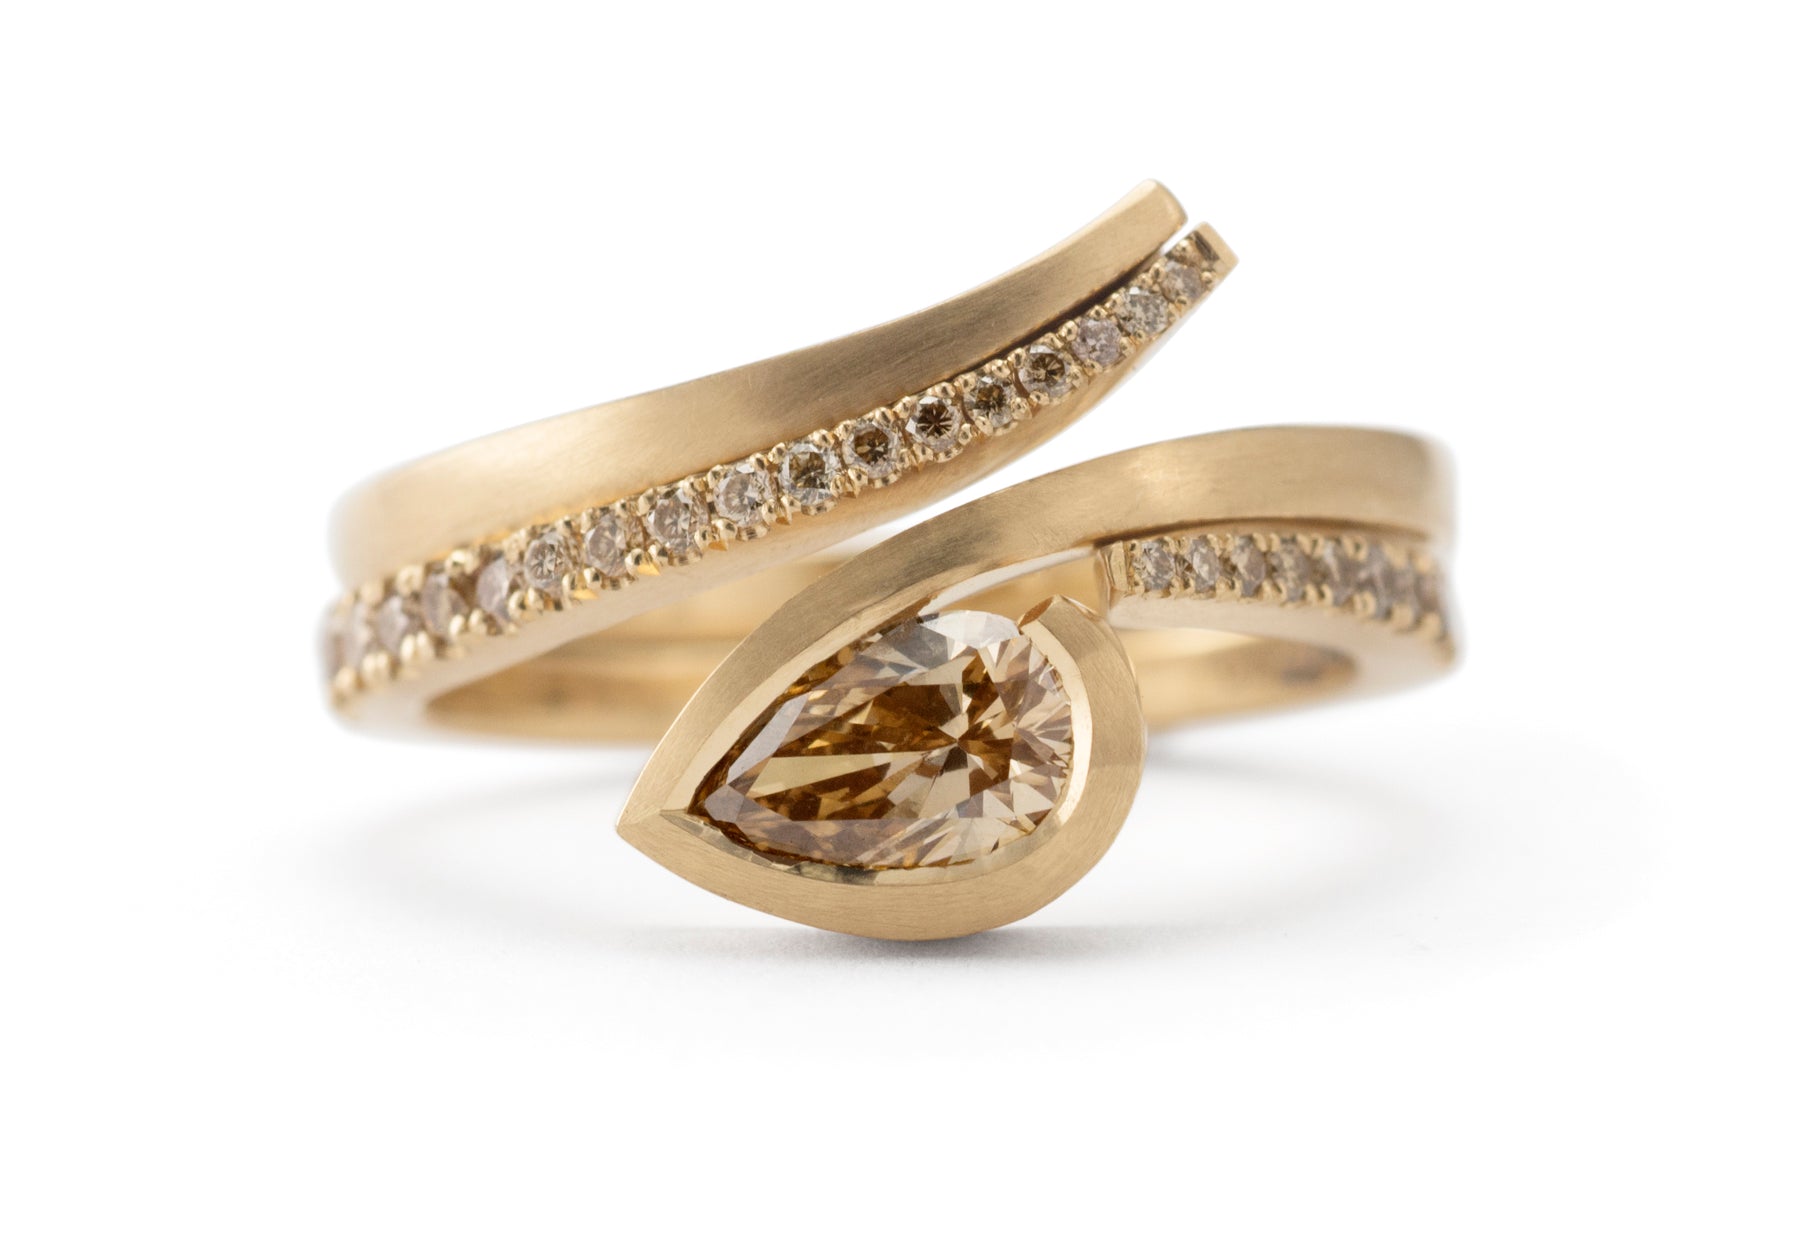 Twist cognac diamond rose gold engagement ring and wedding ring set